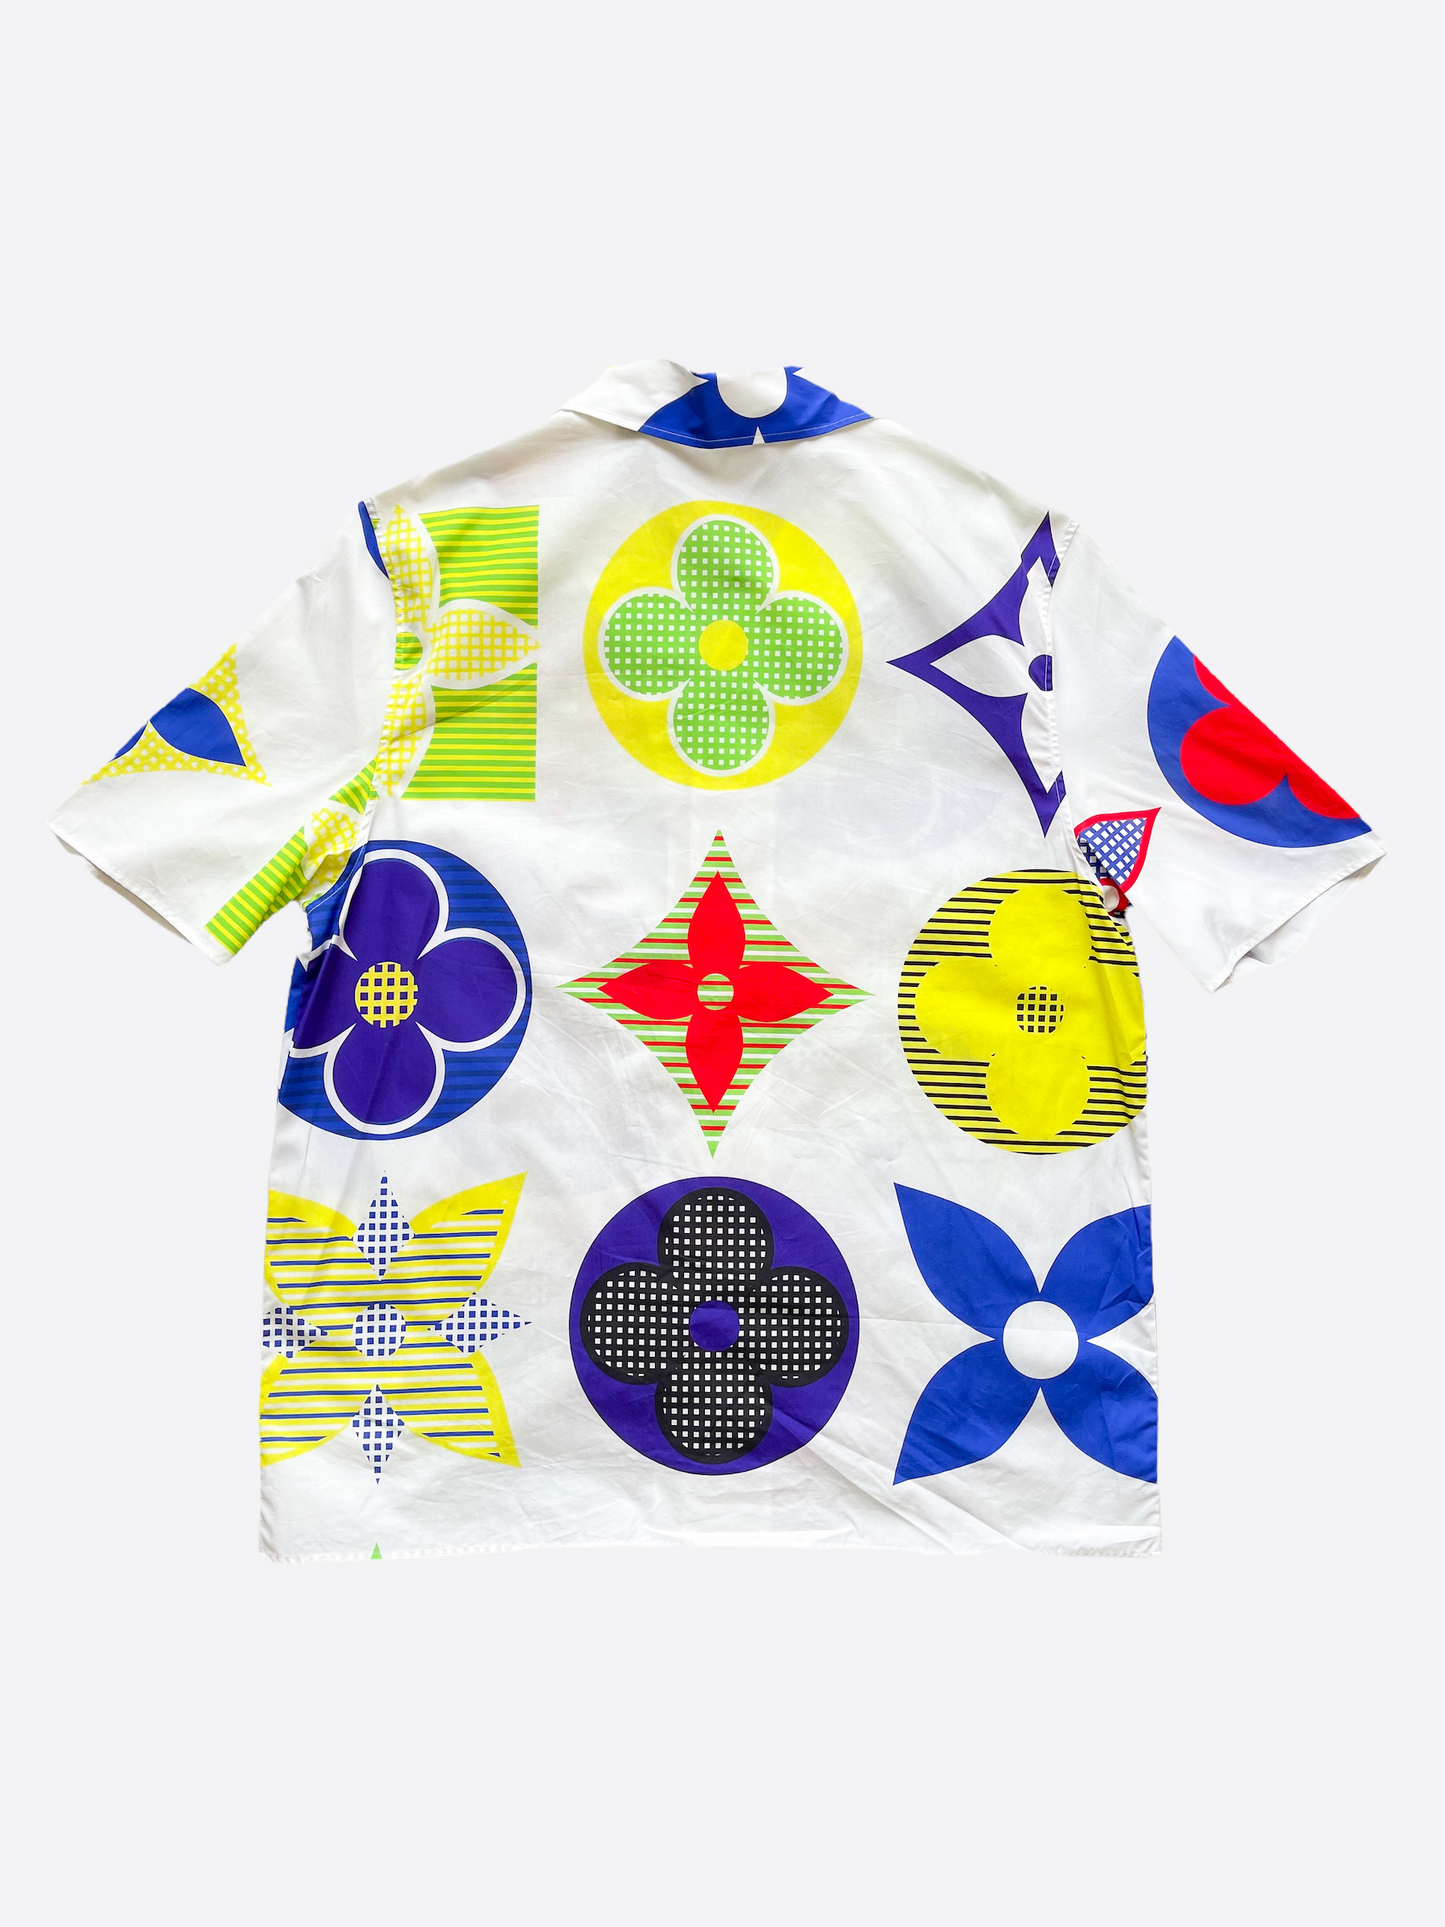 Louis Vuitton Pastel Monogram Button Up Shirt Multi Size XXL